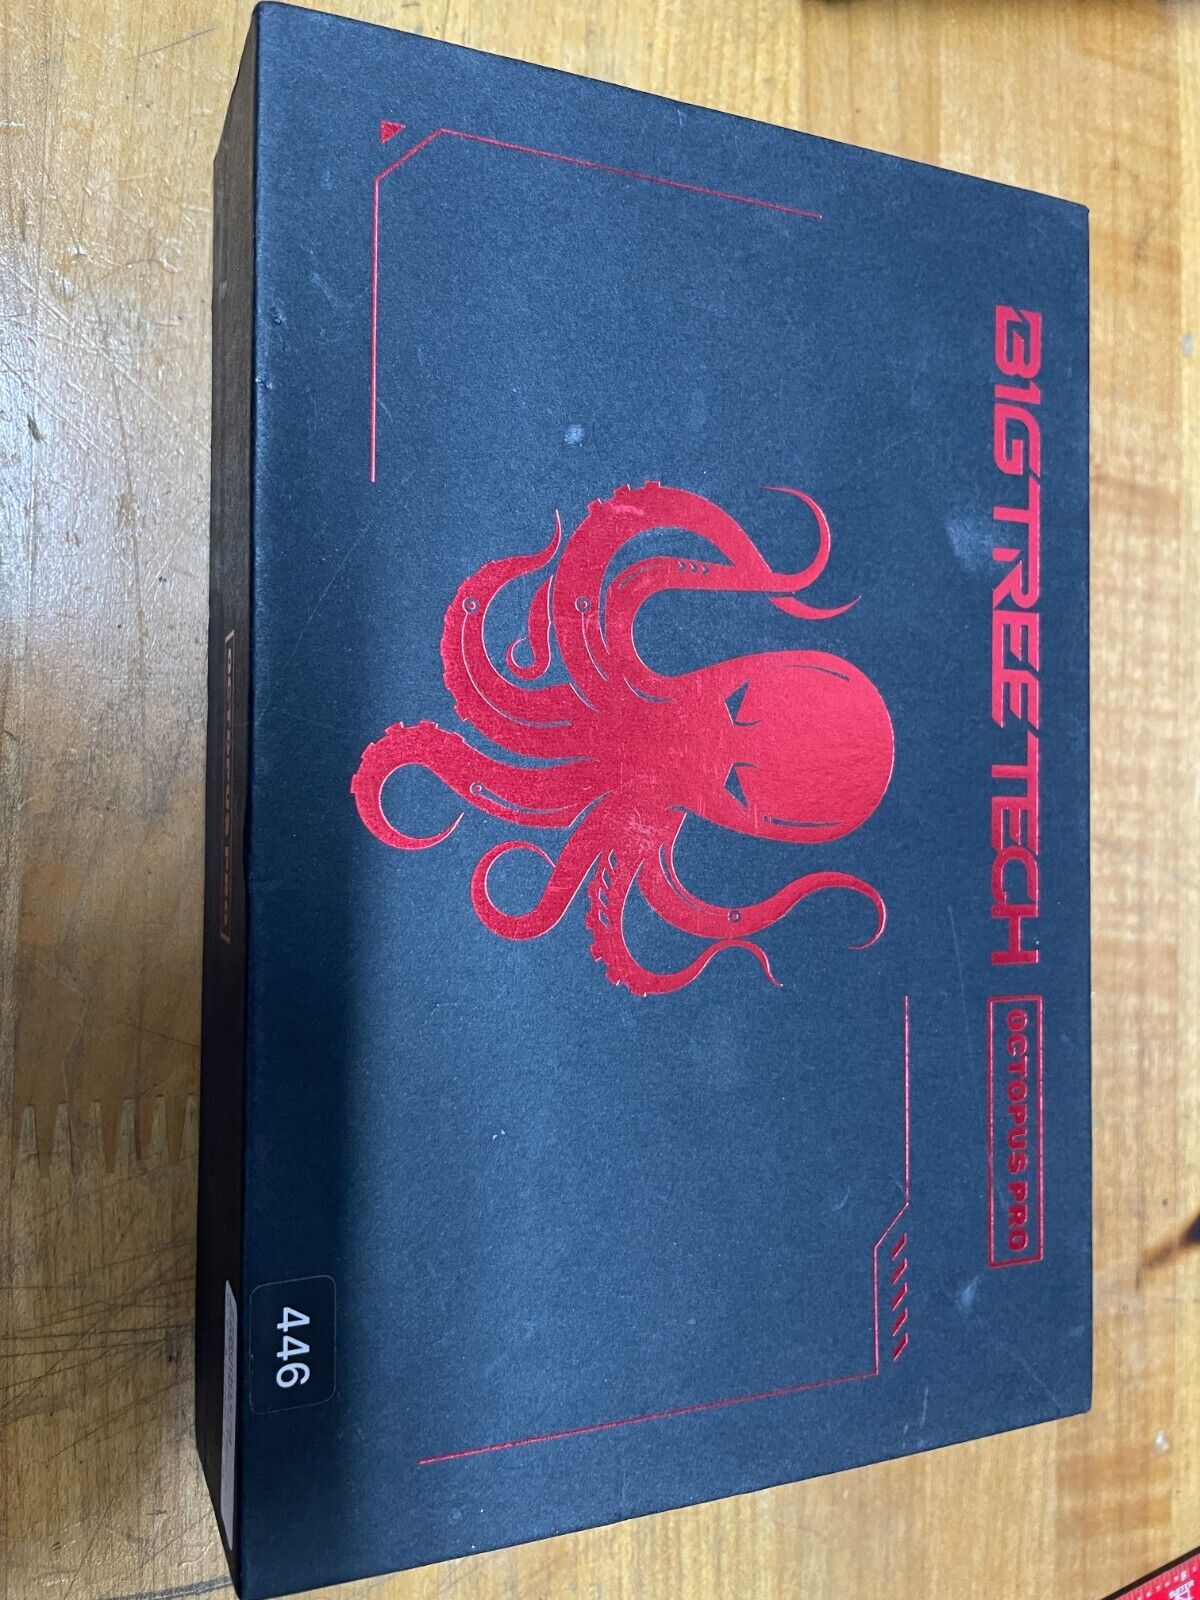 BigTreeTech Octopus Pro V1.1